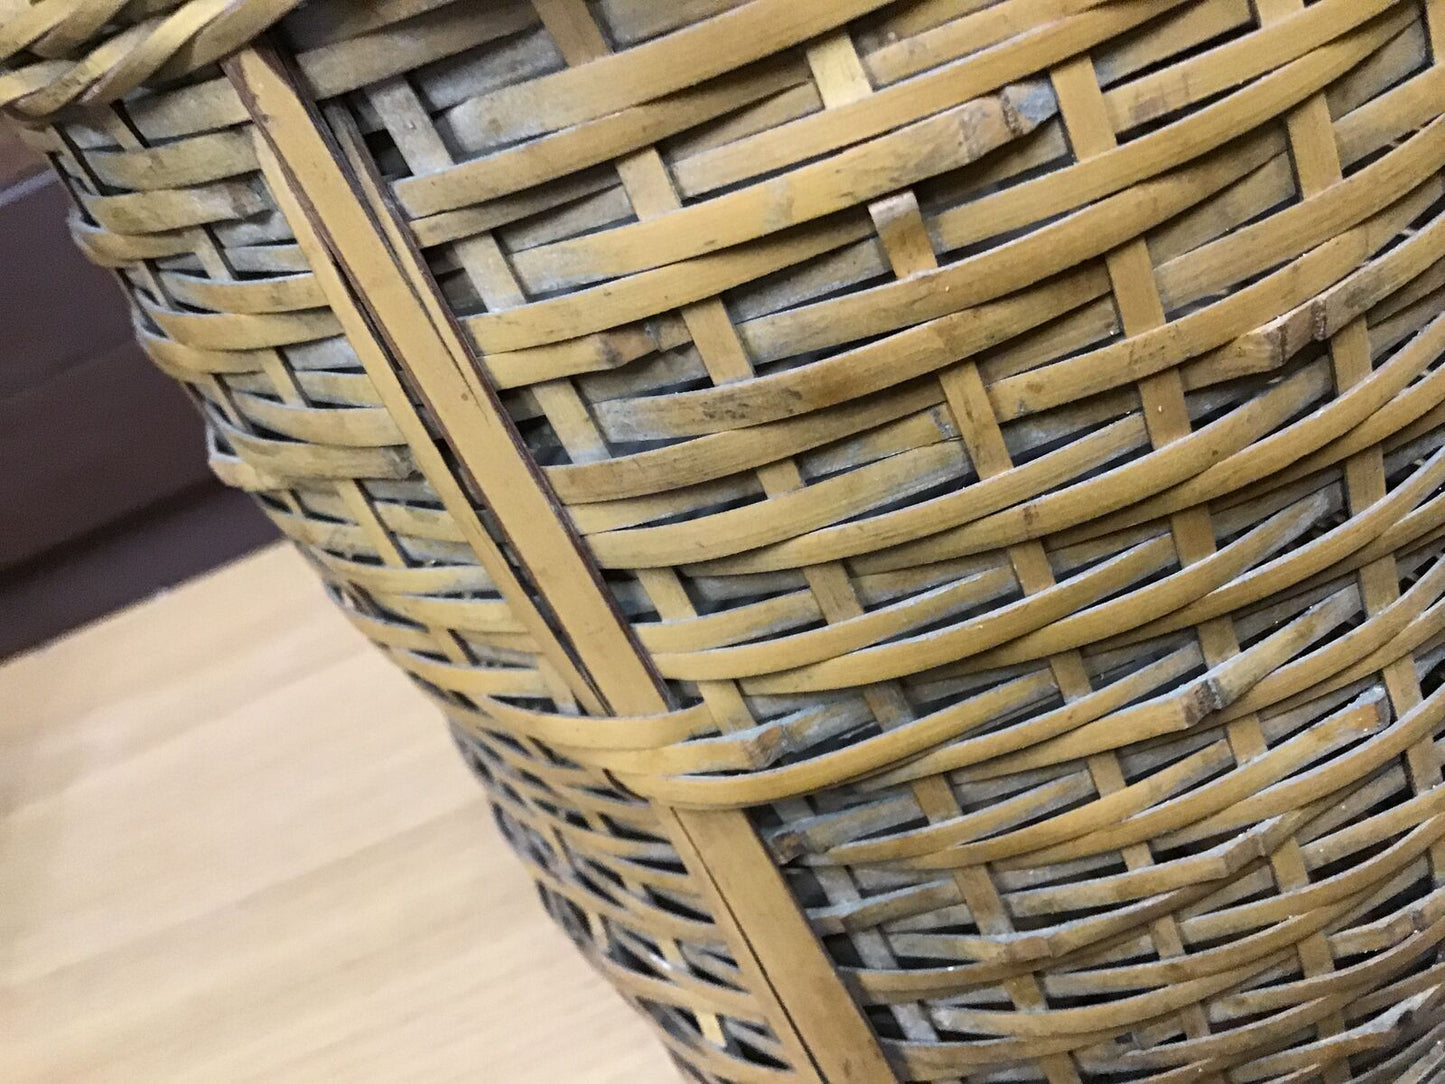 Y0393 FLOWER VASE Bamboo Weaving Basket Japanese antique ikebana kabin japan